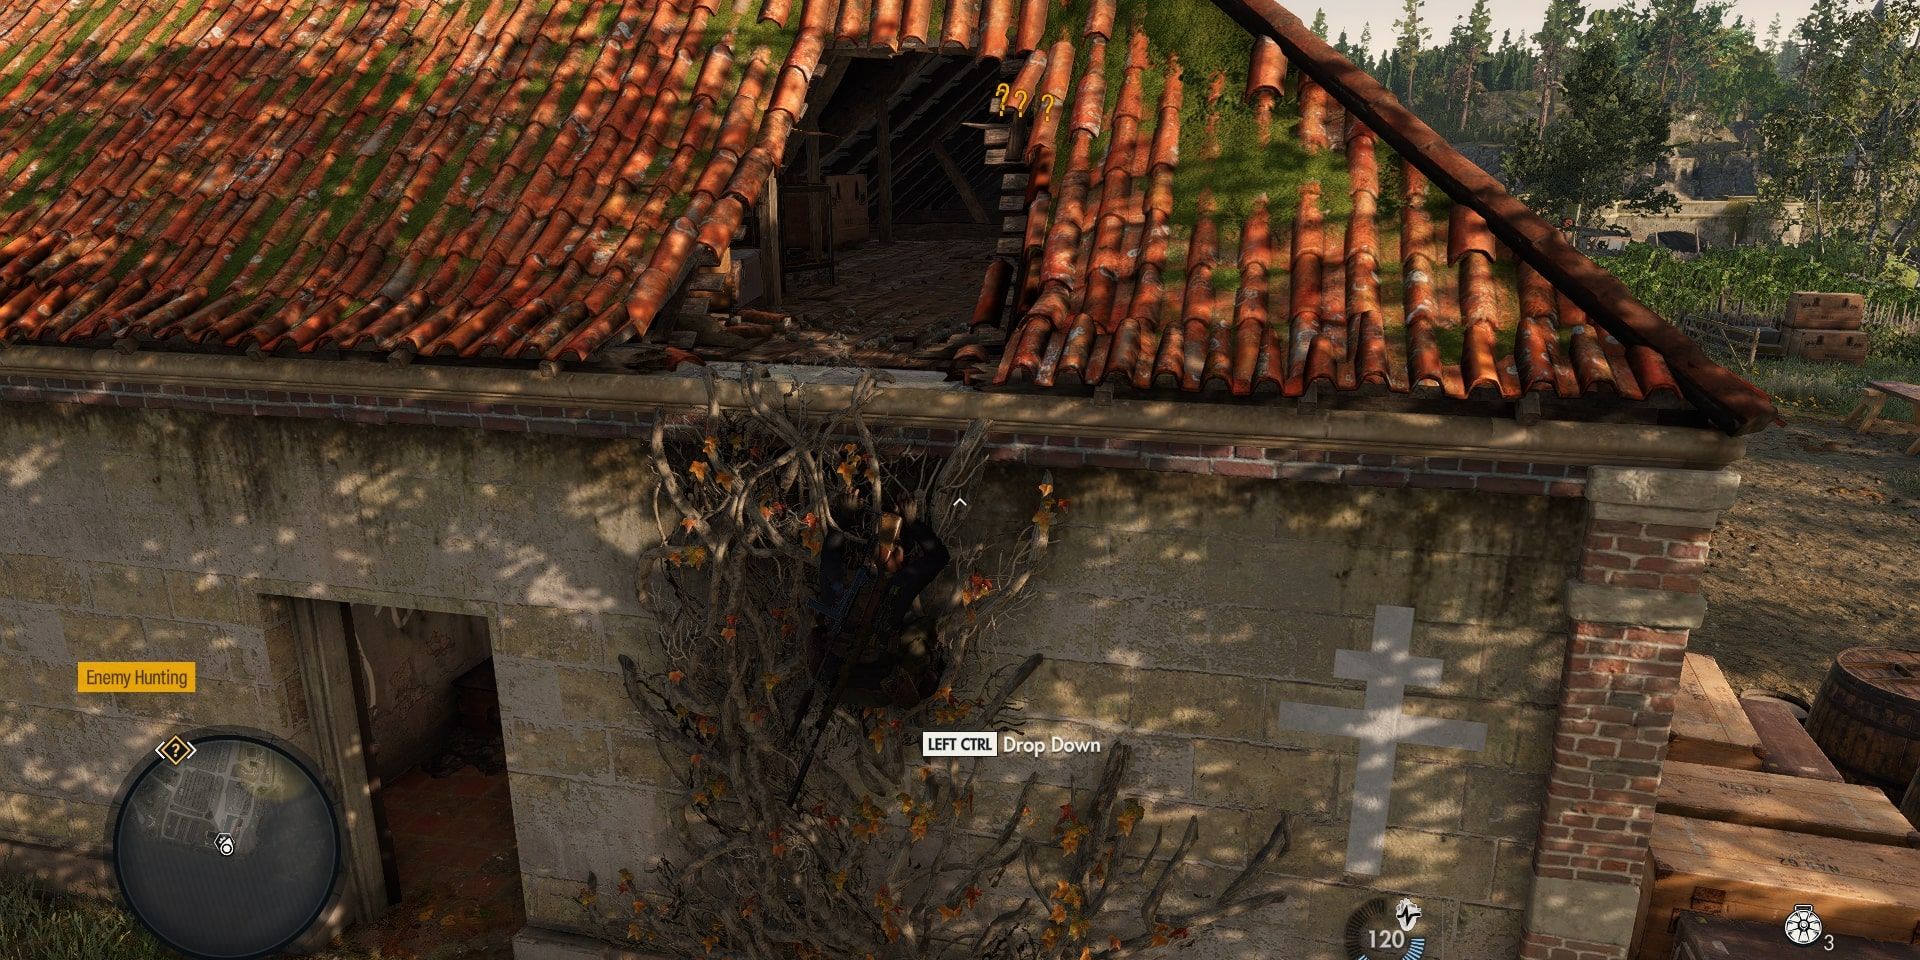 Sniper Elite 5 Mansion hidden area showing the climb using vines to the hidden attic